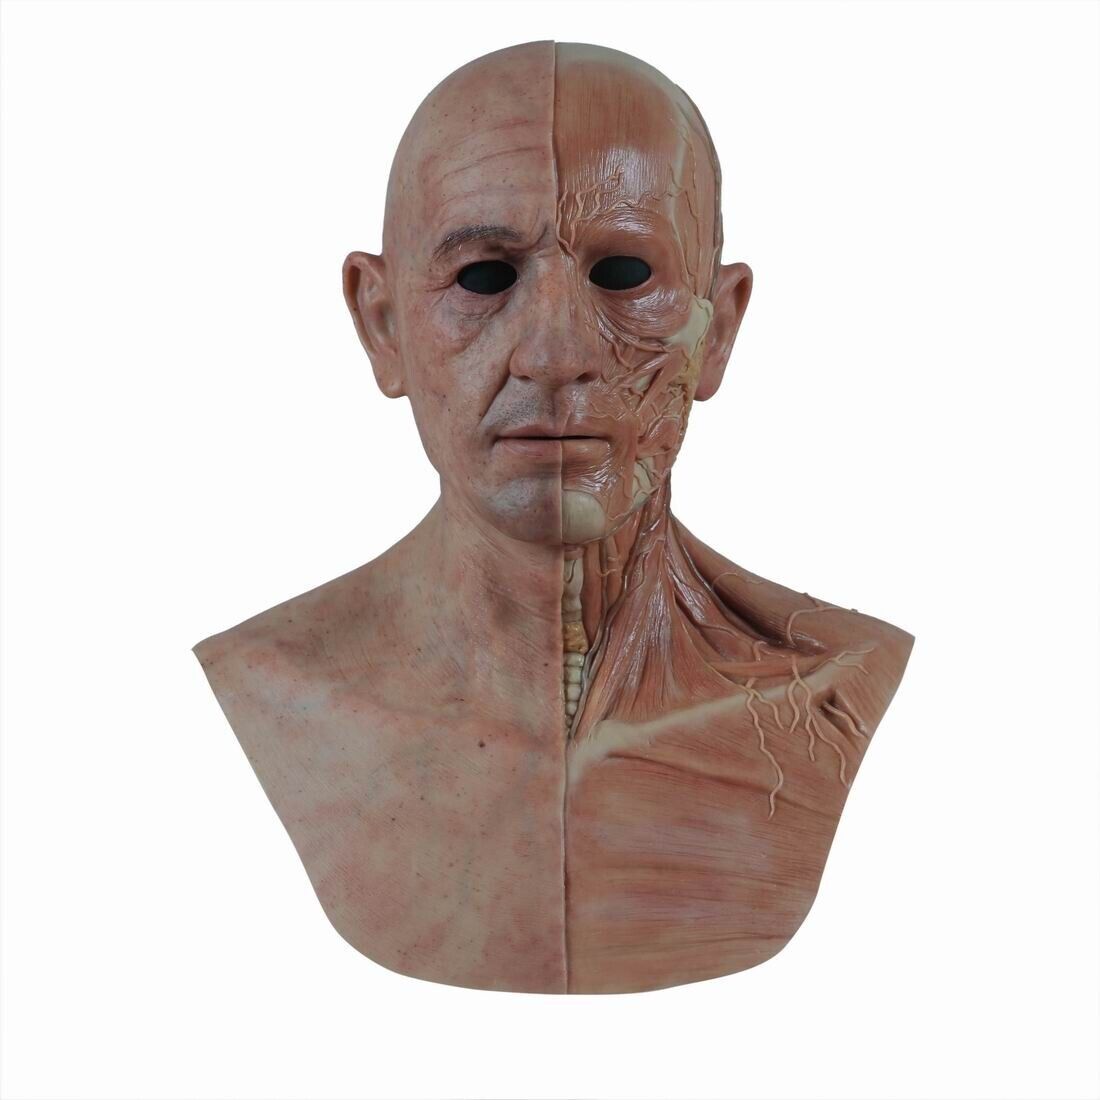 Simulated human anatomy silicone mask /anatomy structure mask / double-sided